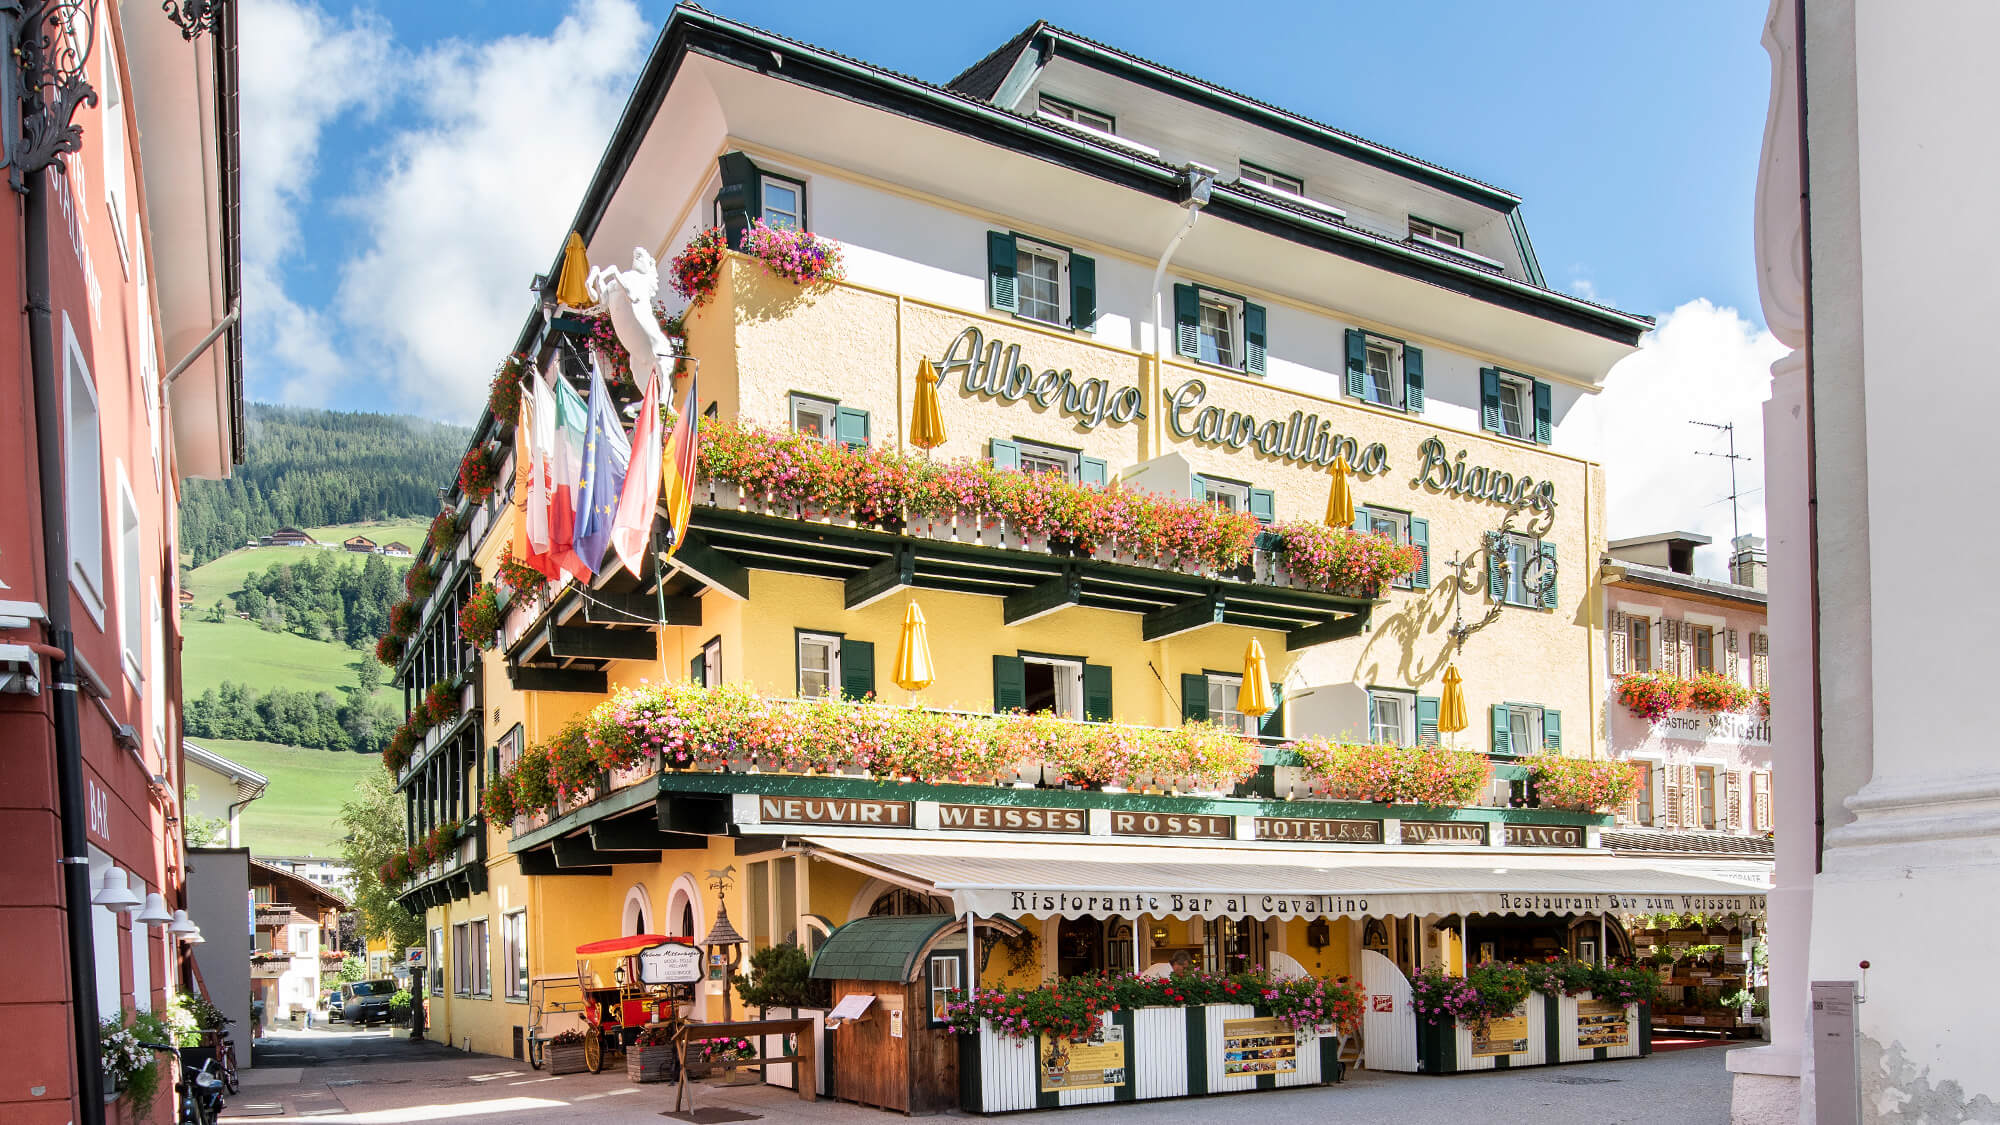 lov Intensiv Trafik Hotel Cavallino Bianco: 4*S Hotel in San Candido, Italy